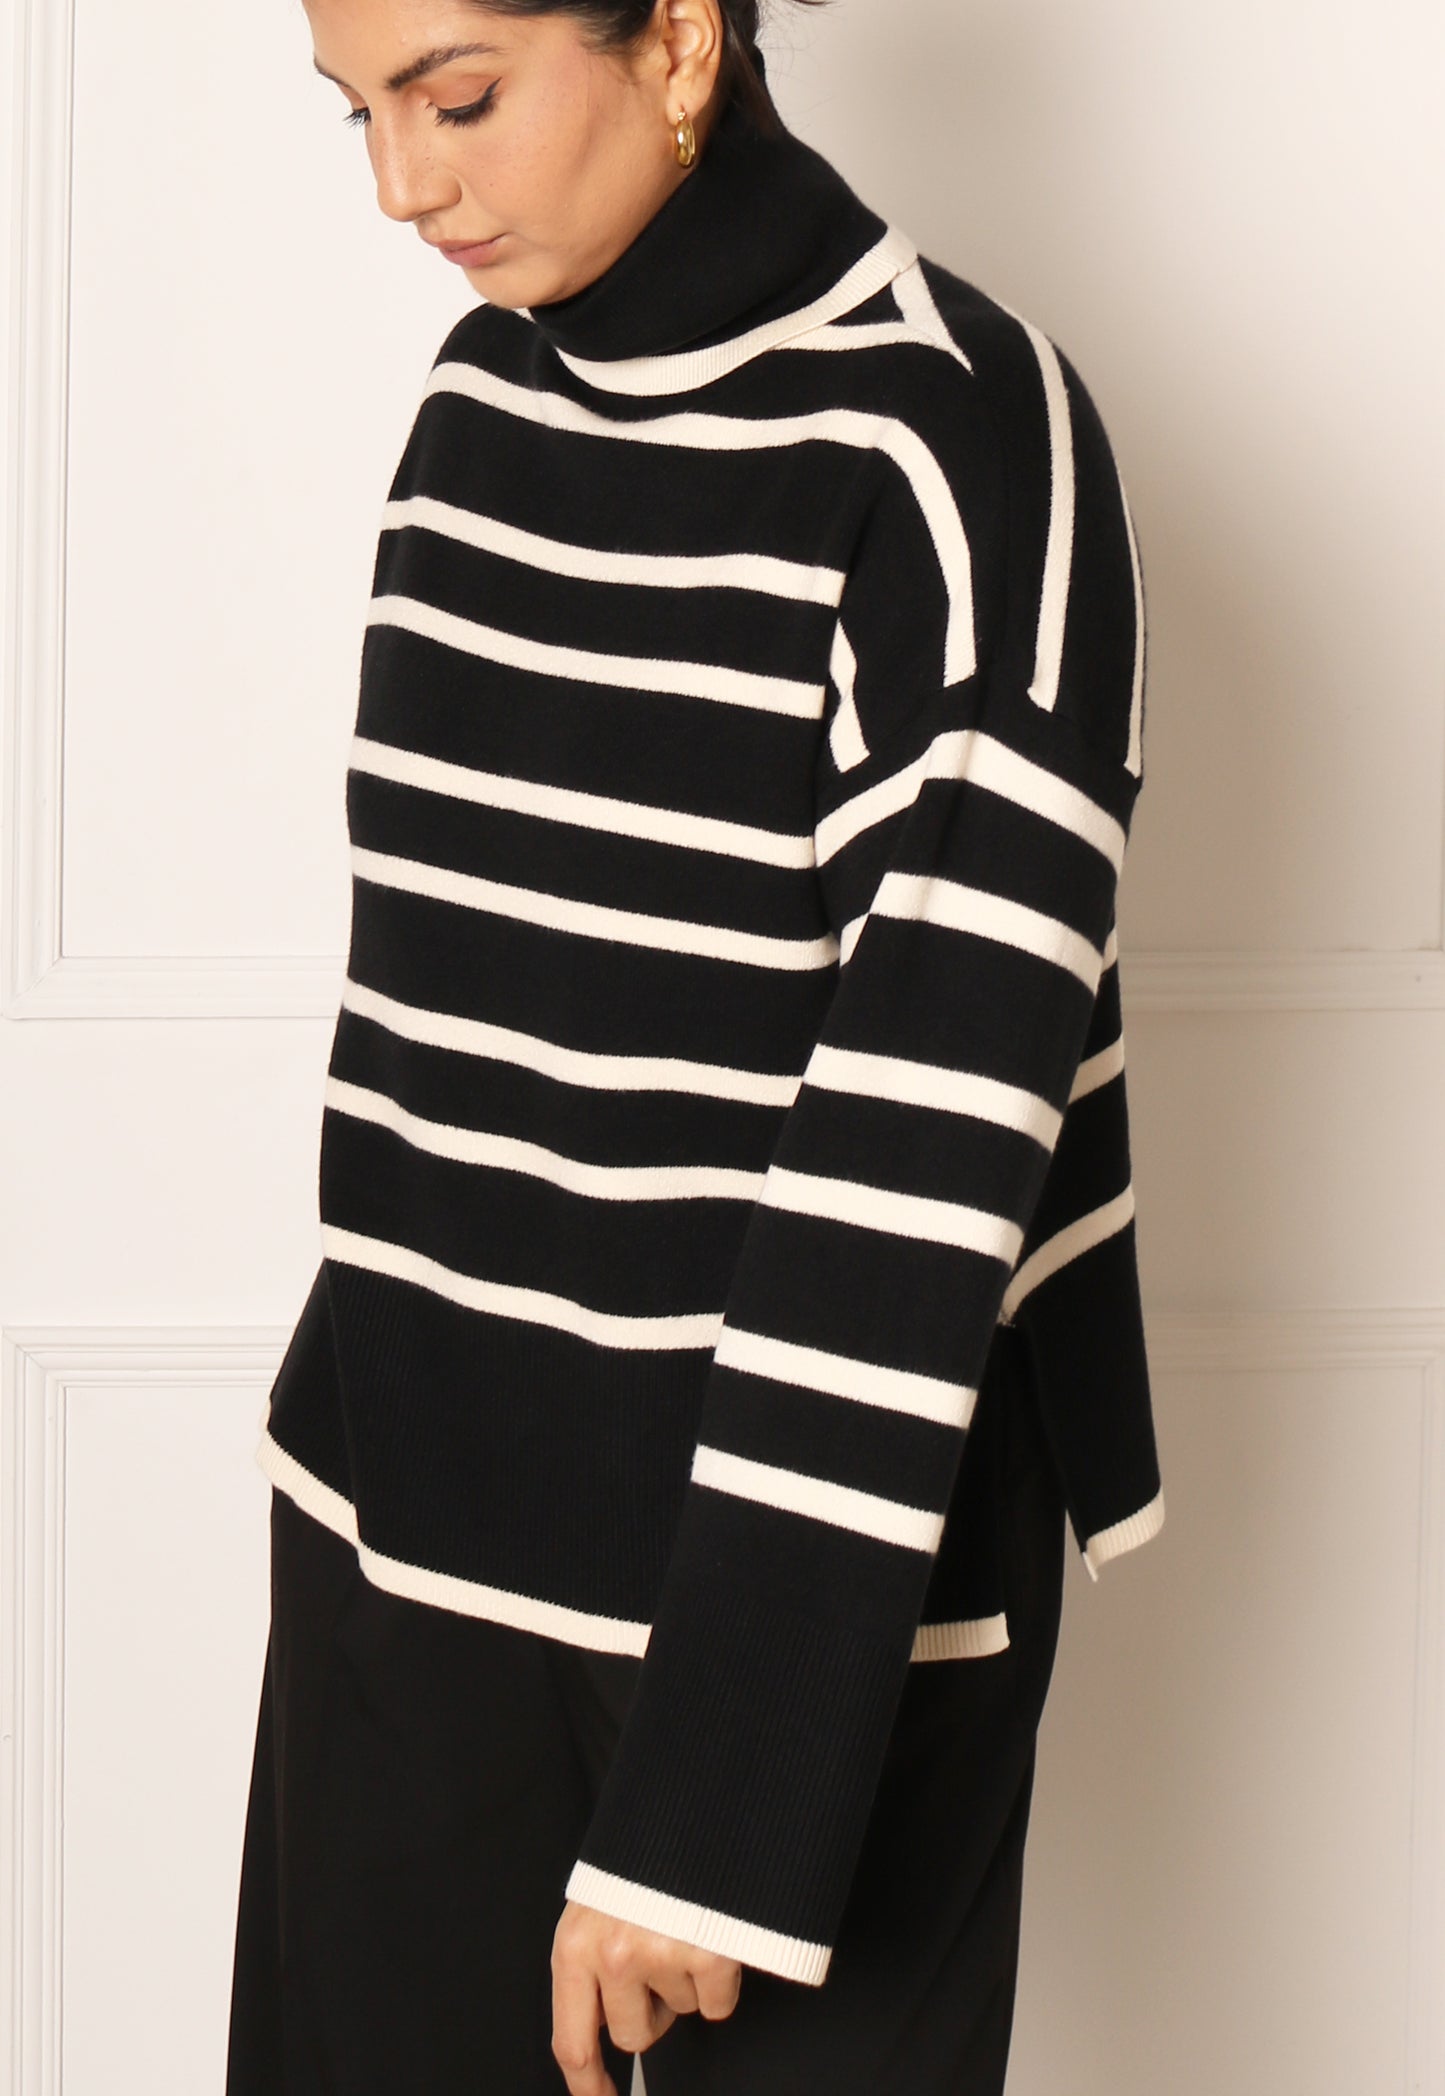 
                  
                    VERO MODA Soft Knit Stripe Rollneck Jumper in Black & Cream - One Nation Clothing
                  
                